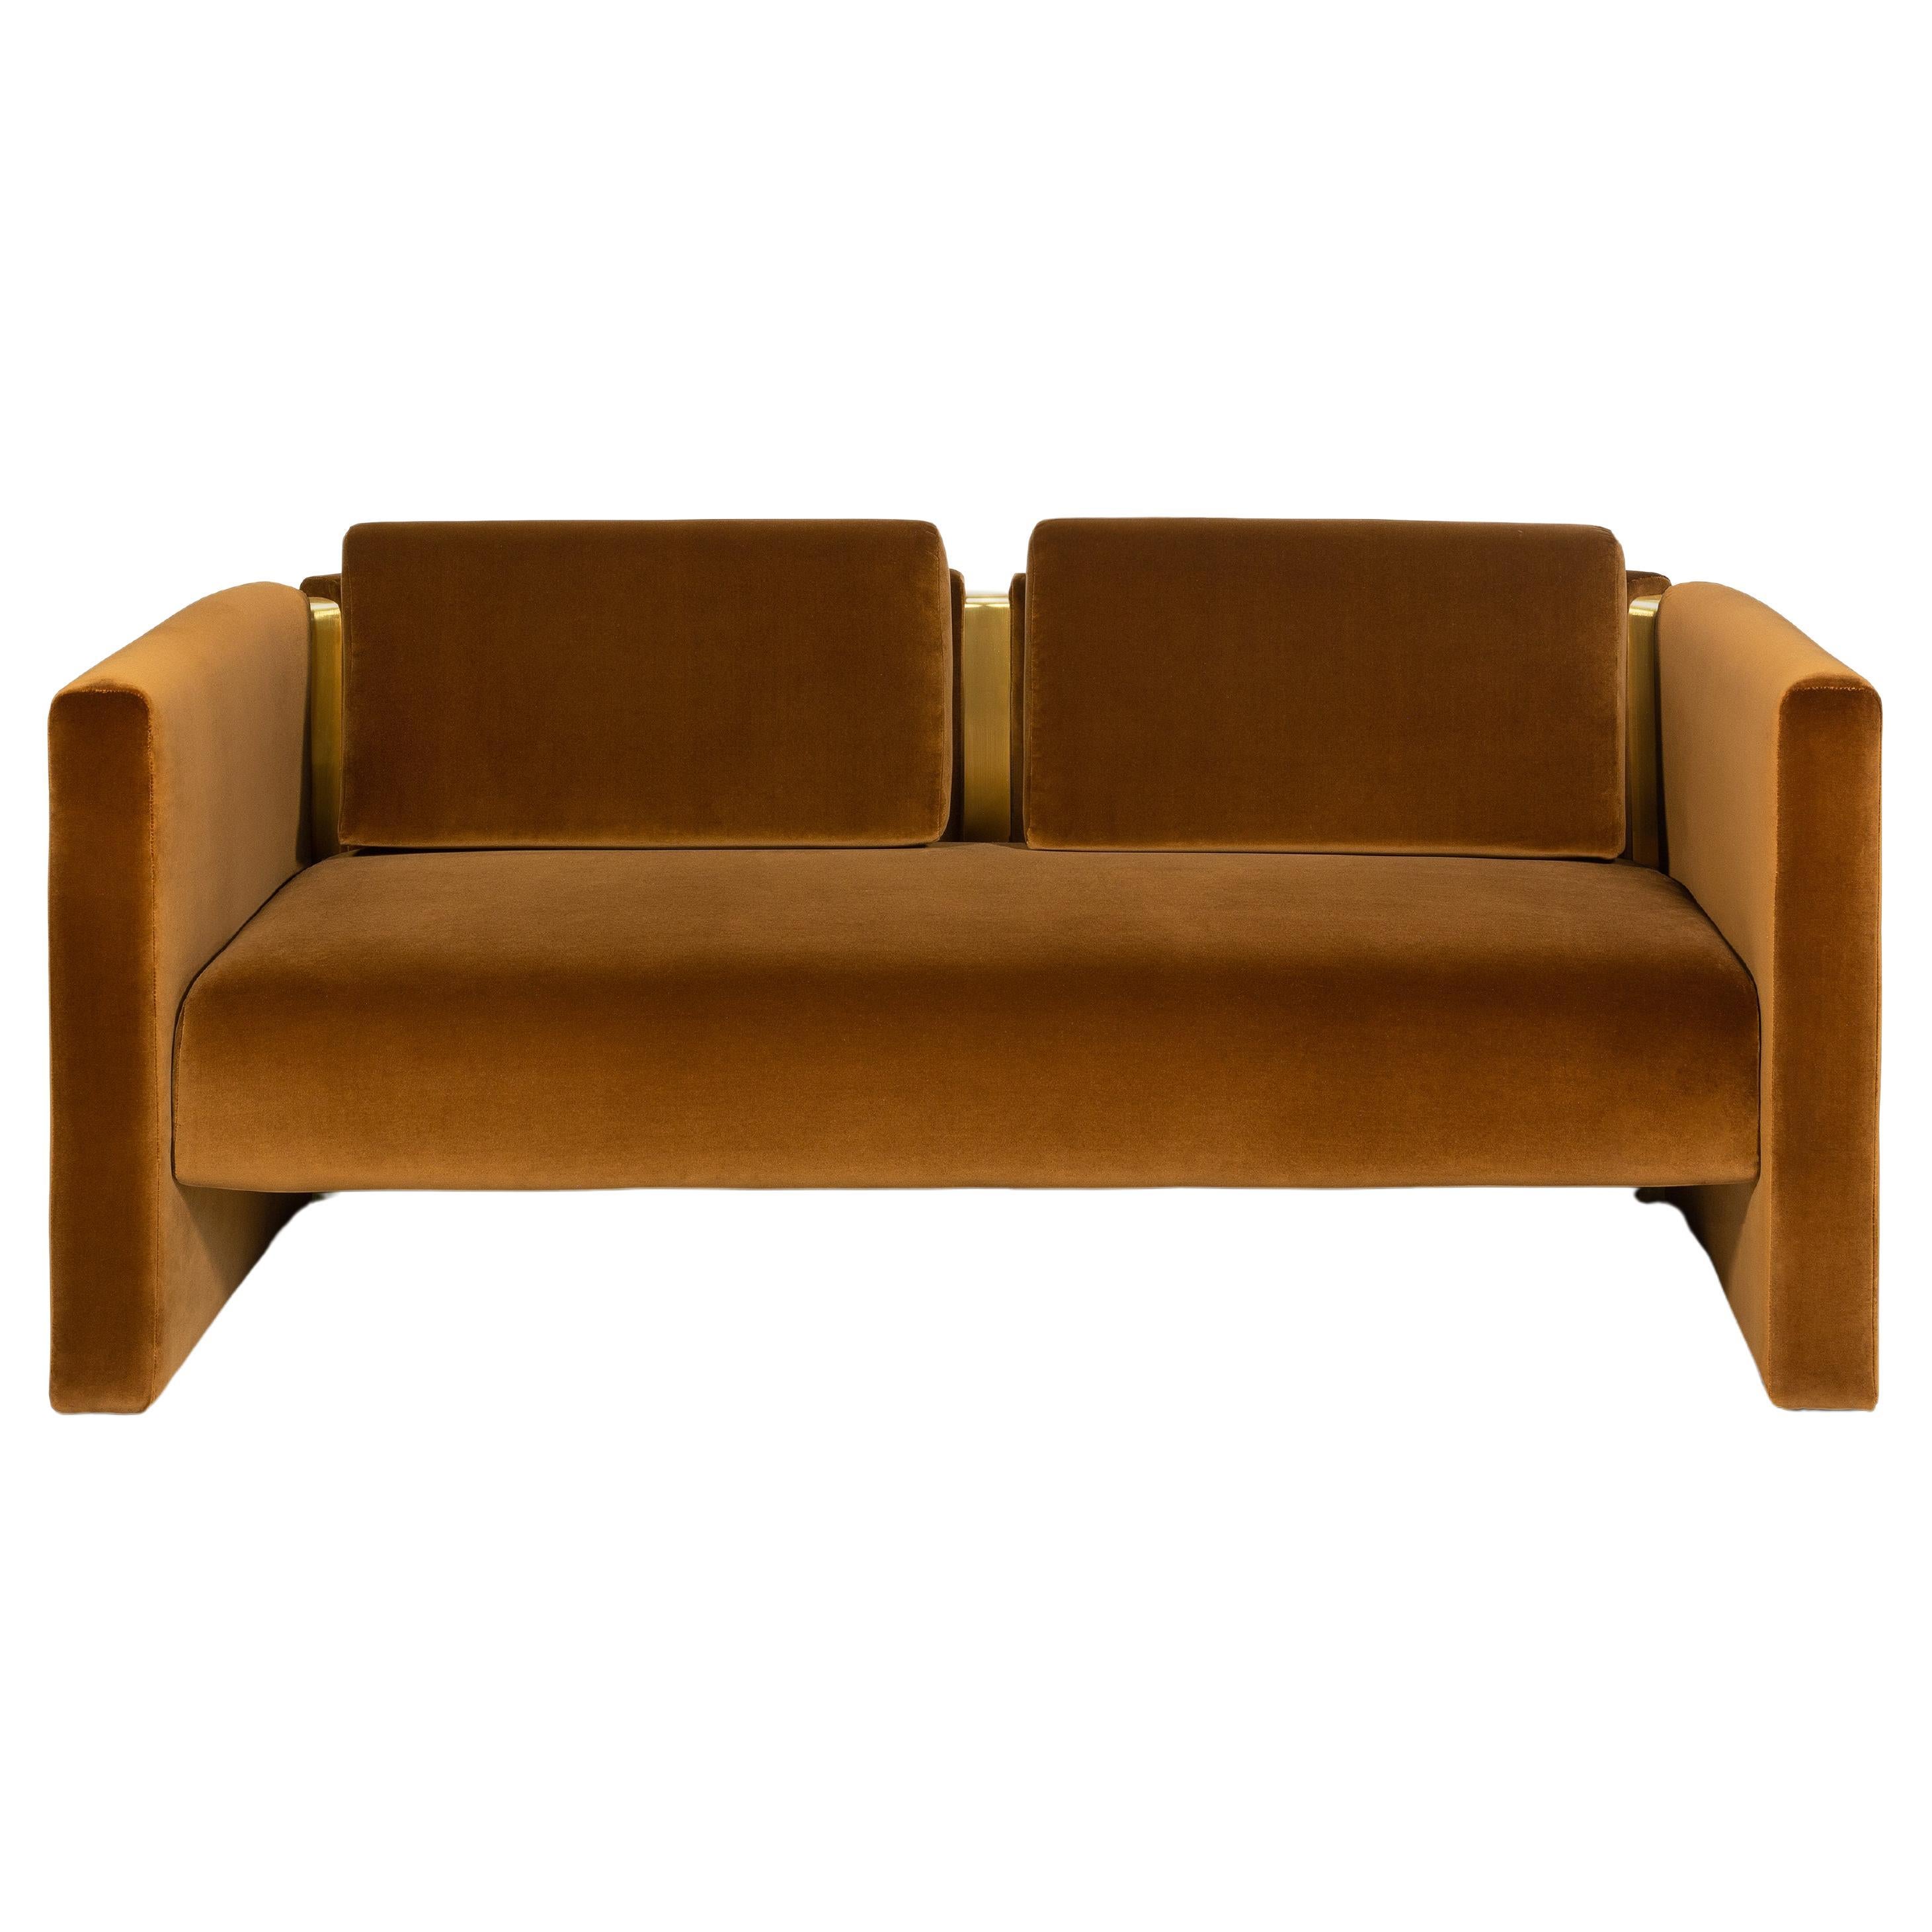 Fernandine II Seat Sofa by InsidherLand For Sale